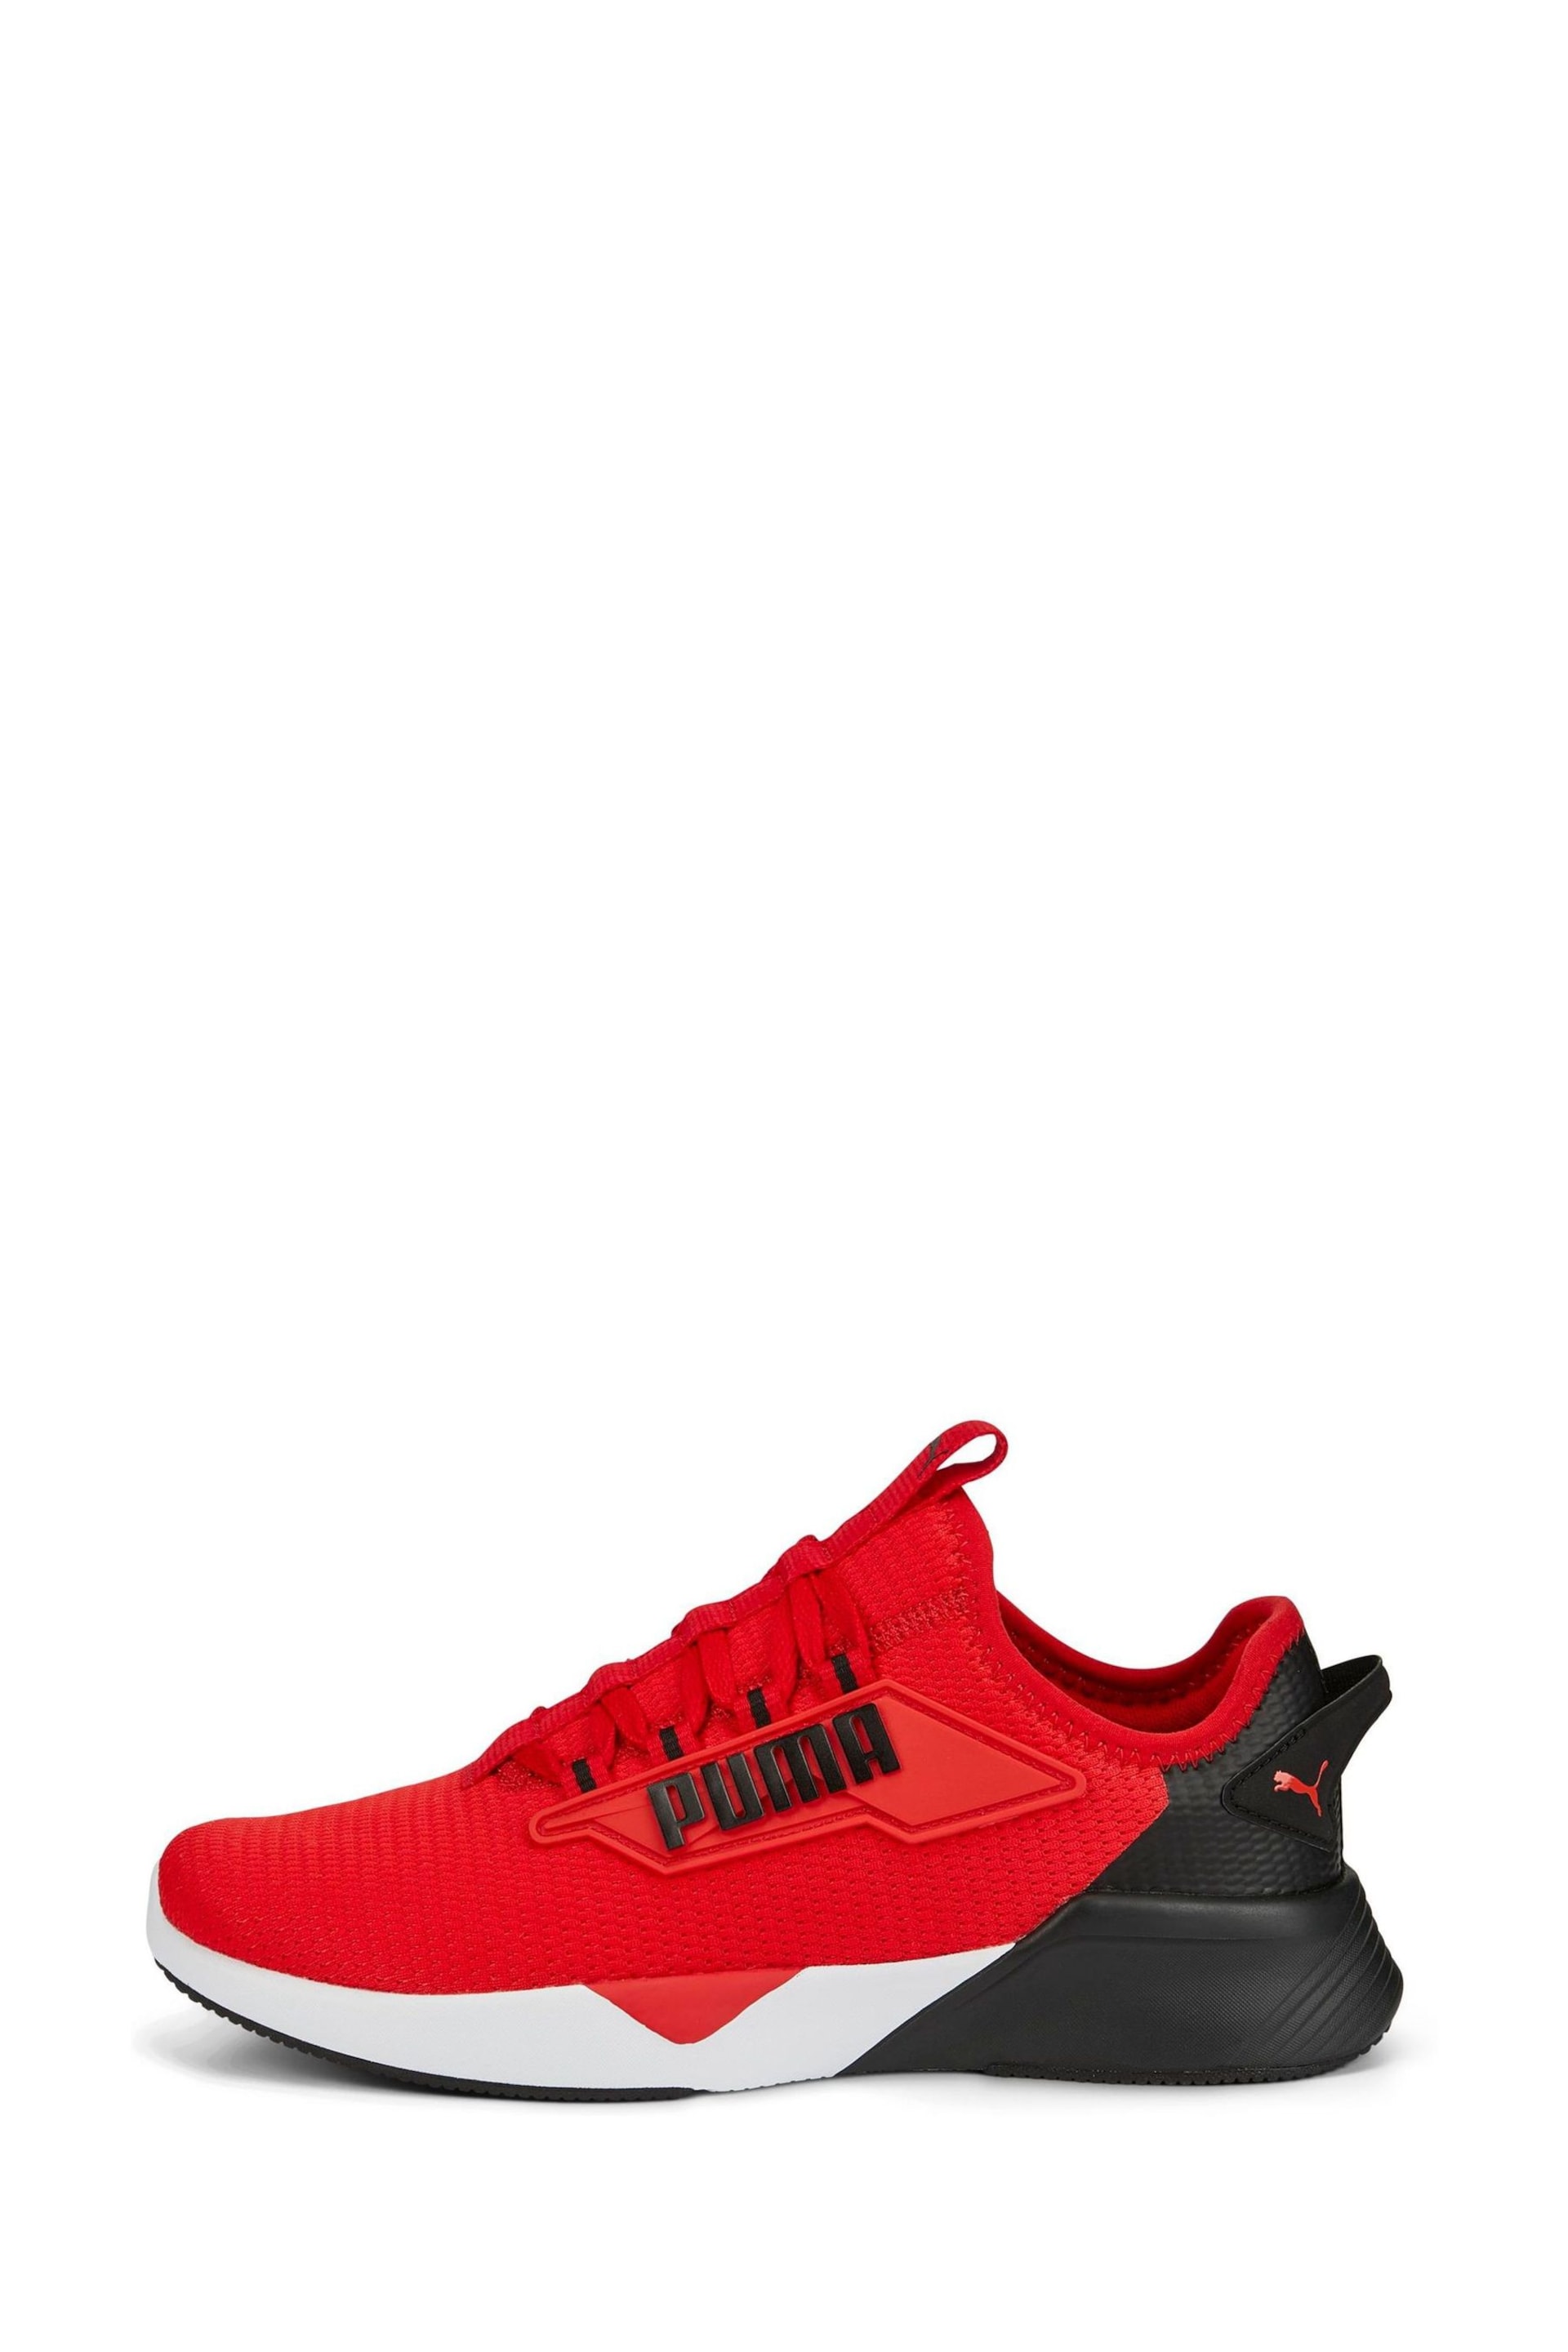 Puma Red Retaliate 2 Running Shoes - Image 1 of 5